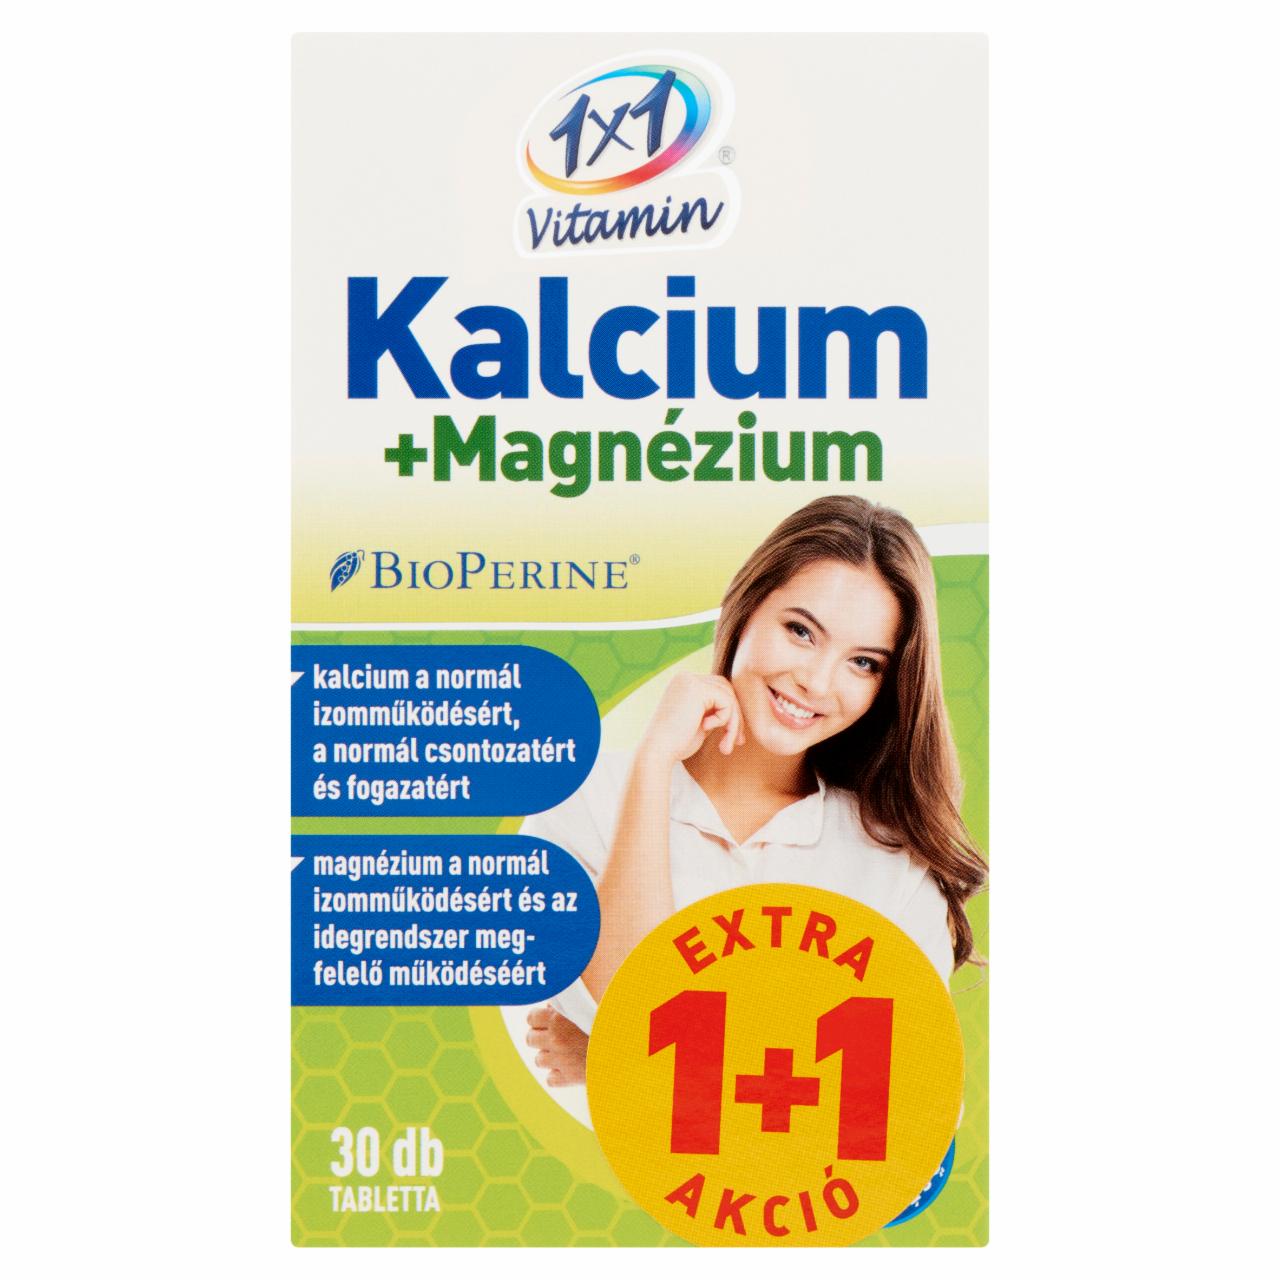 Képek - 1x1 Vitamin Kalcium + Magnézium étrend-kiegészítő filmtabletta 2 x 30 db